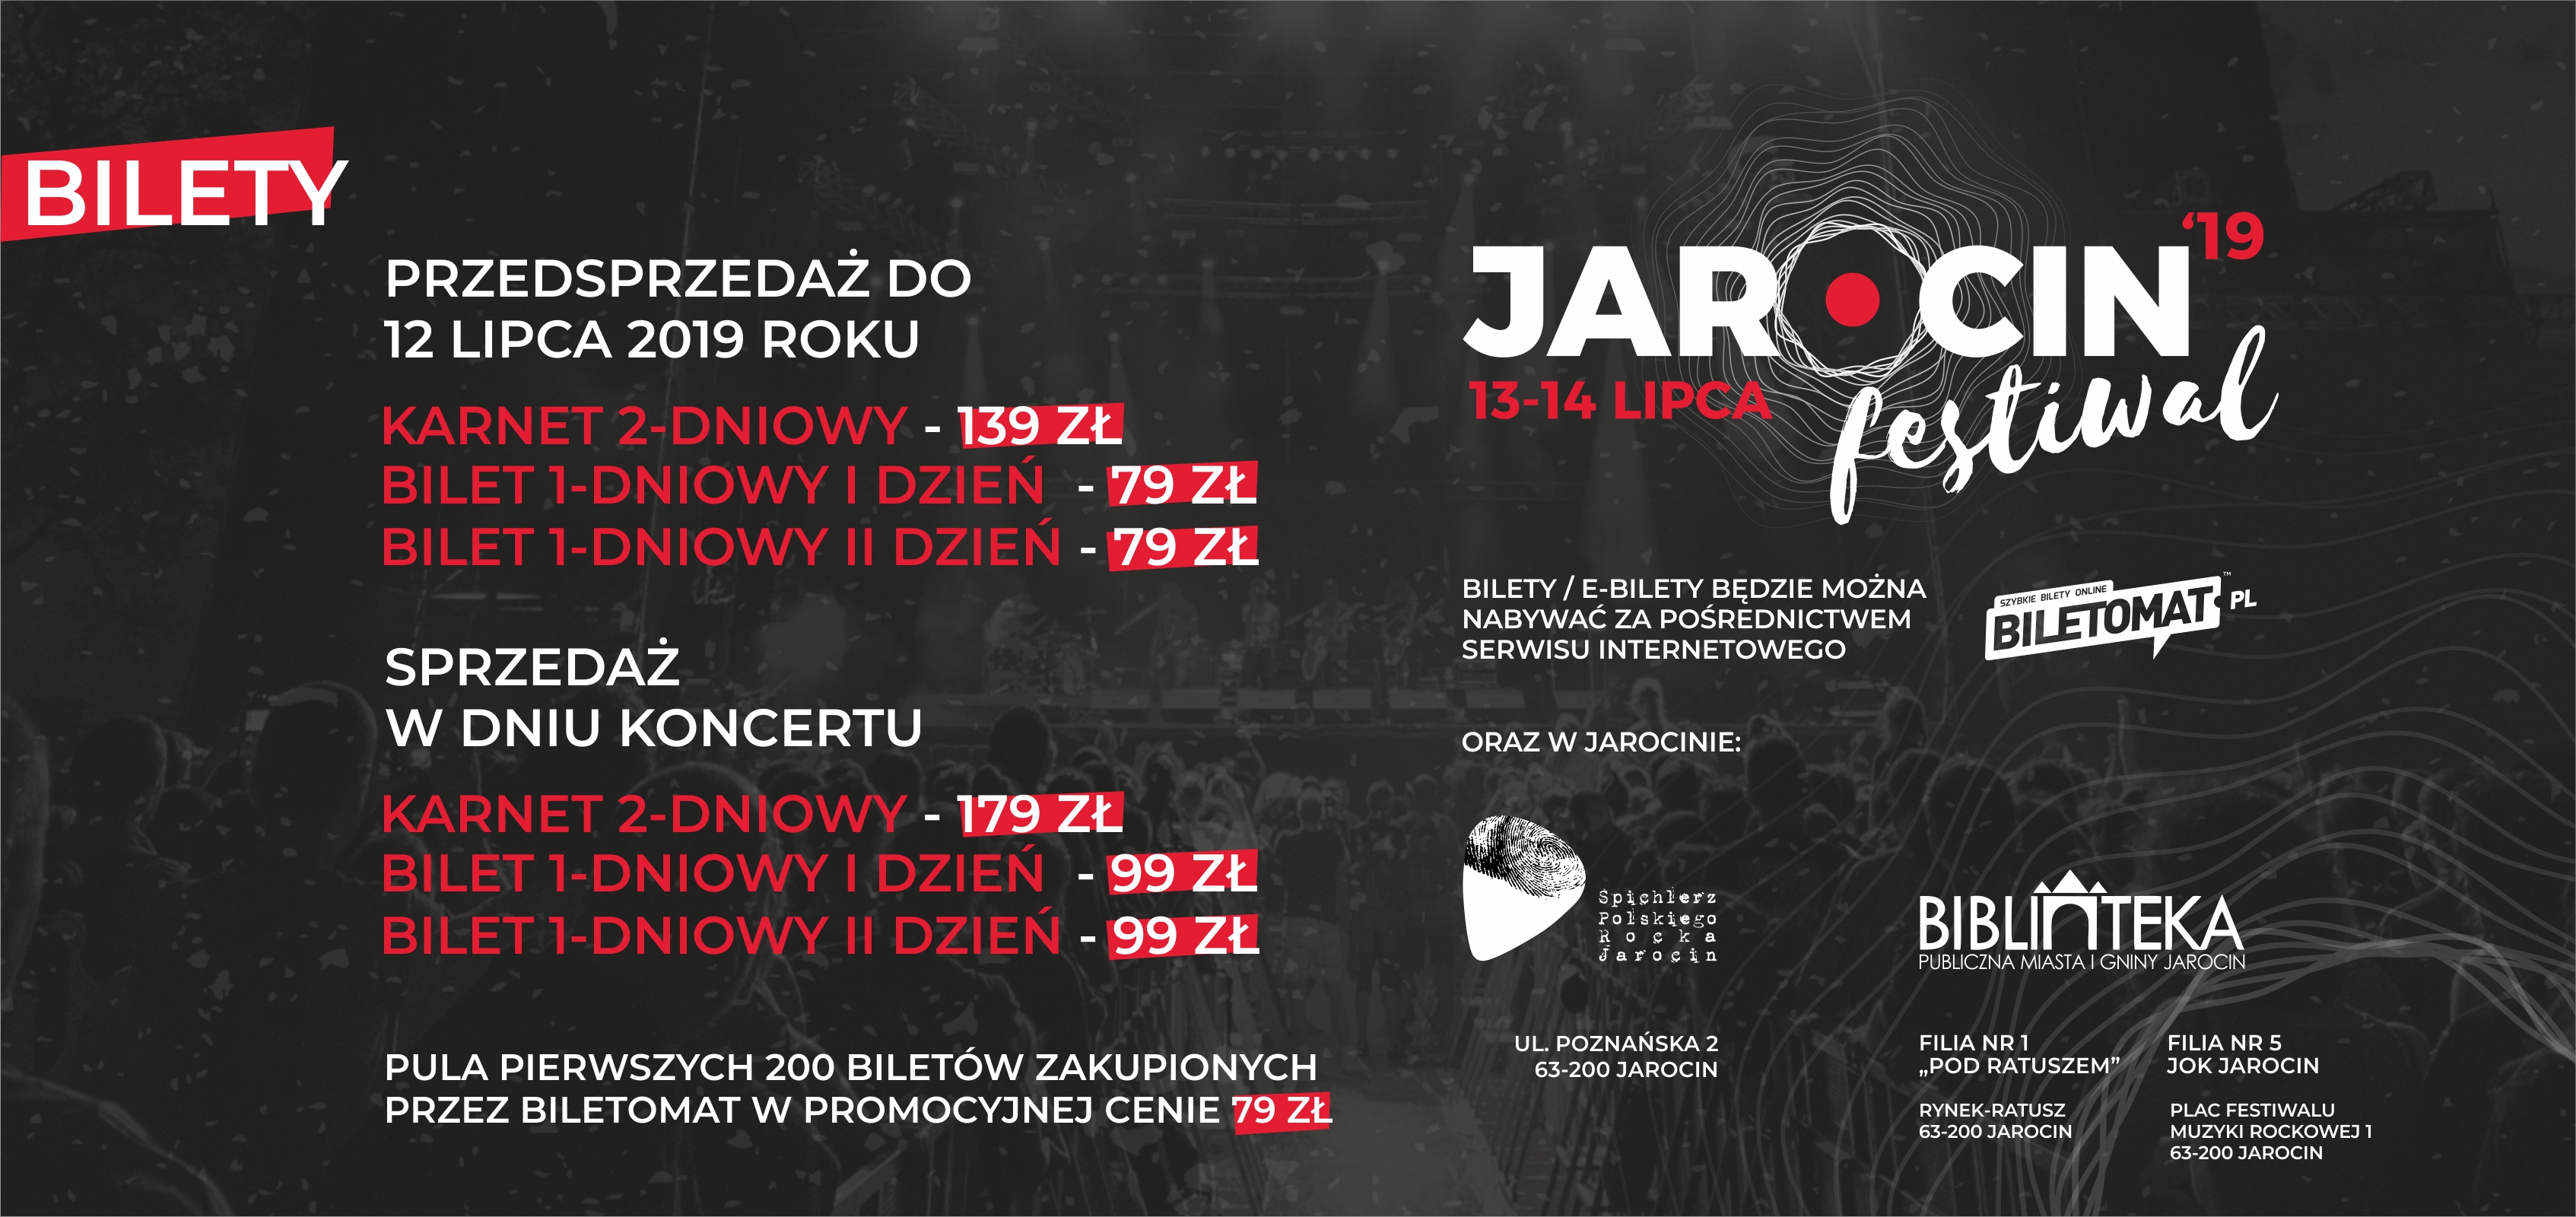 Jarocin Festiwal 2019 – informacja o karnetach i biletach